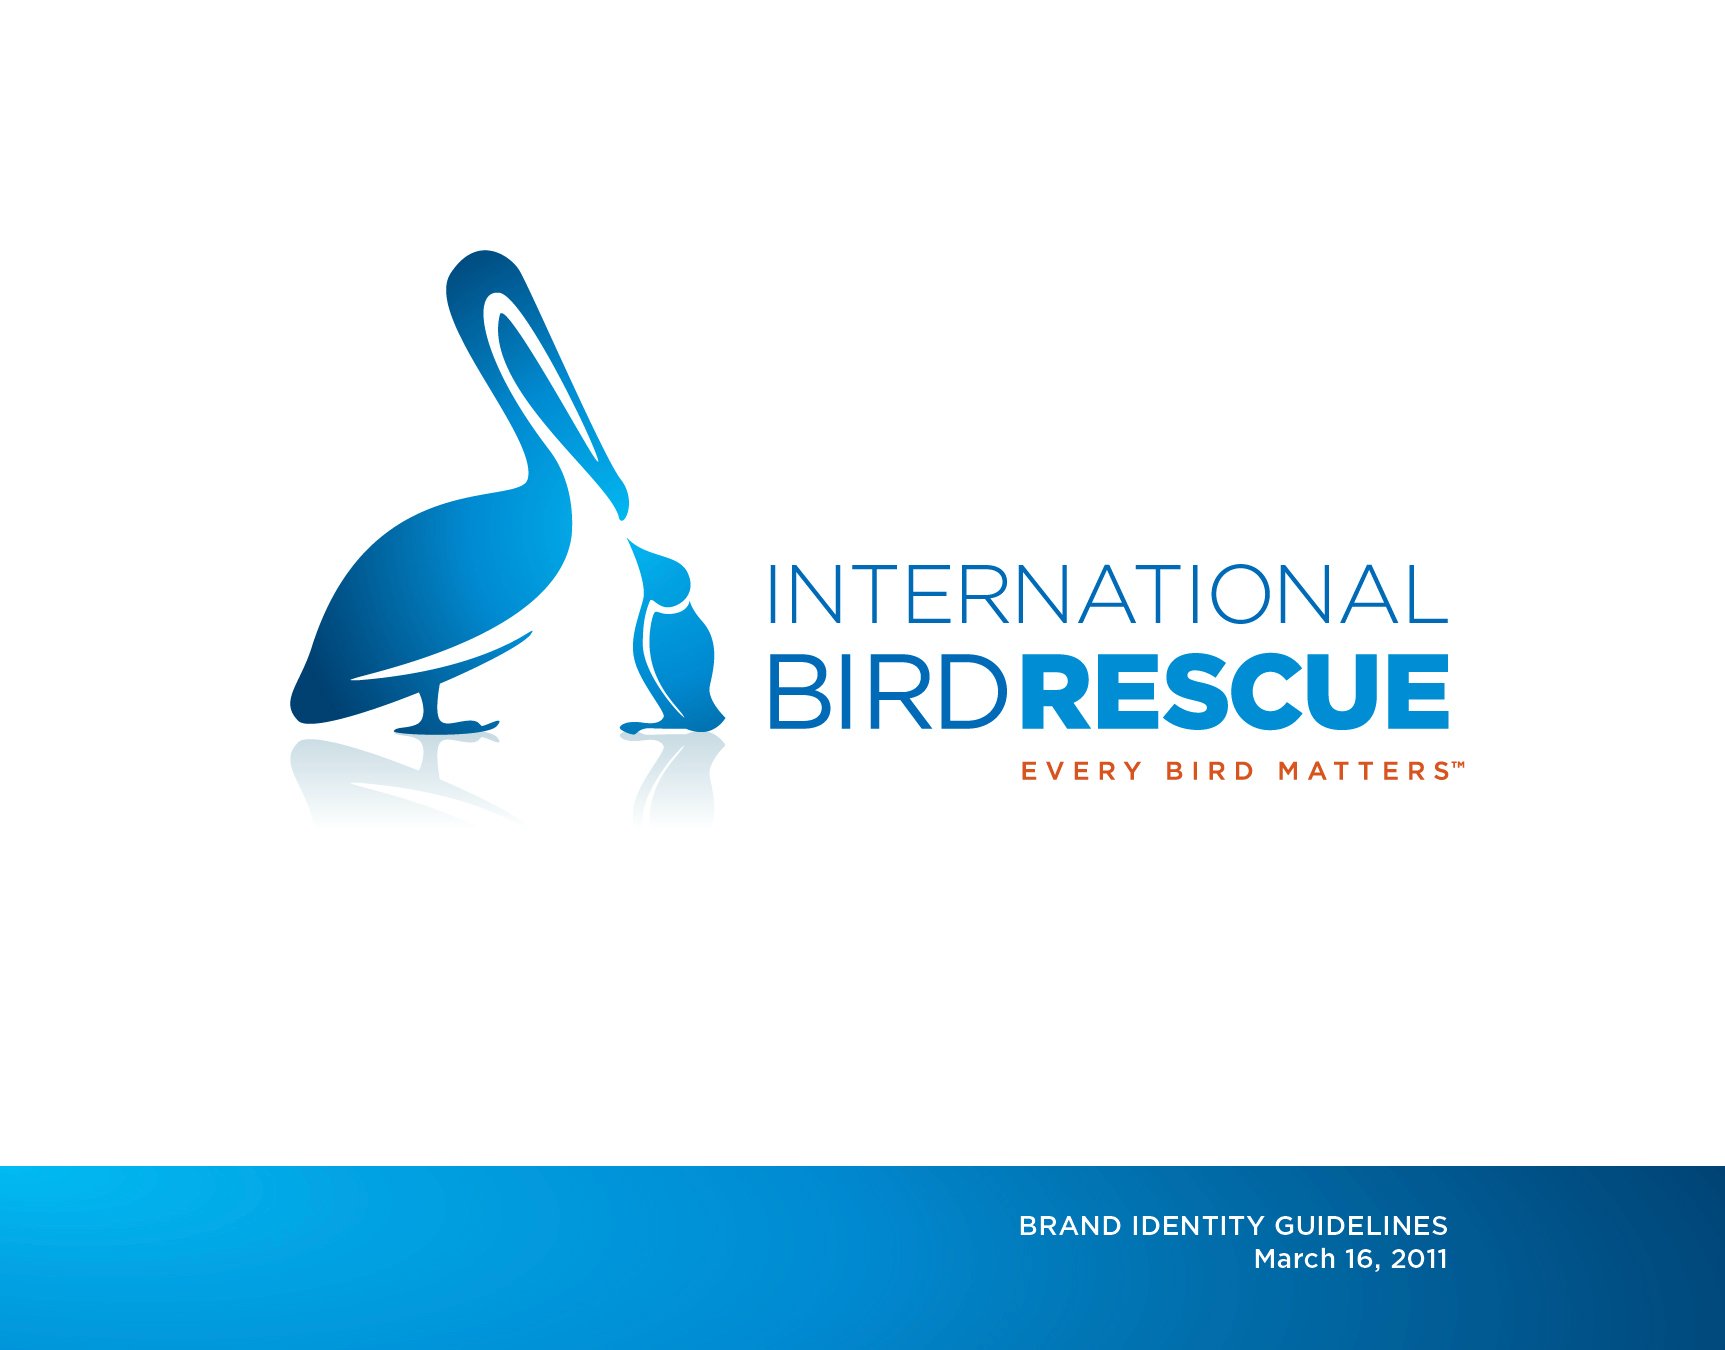 InternationalBirdRescue_Guidelines-01.jpeg